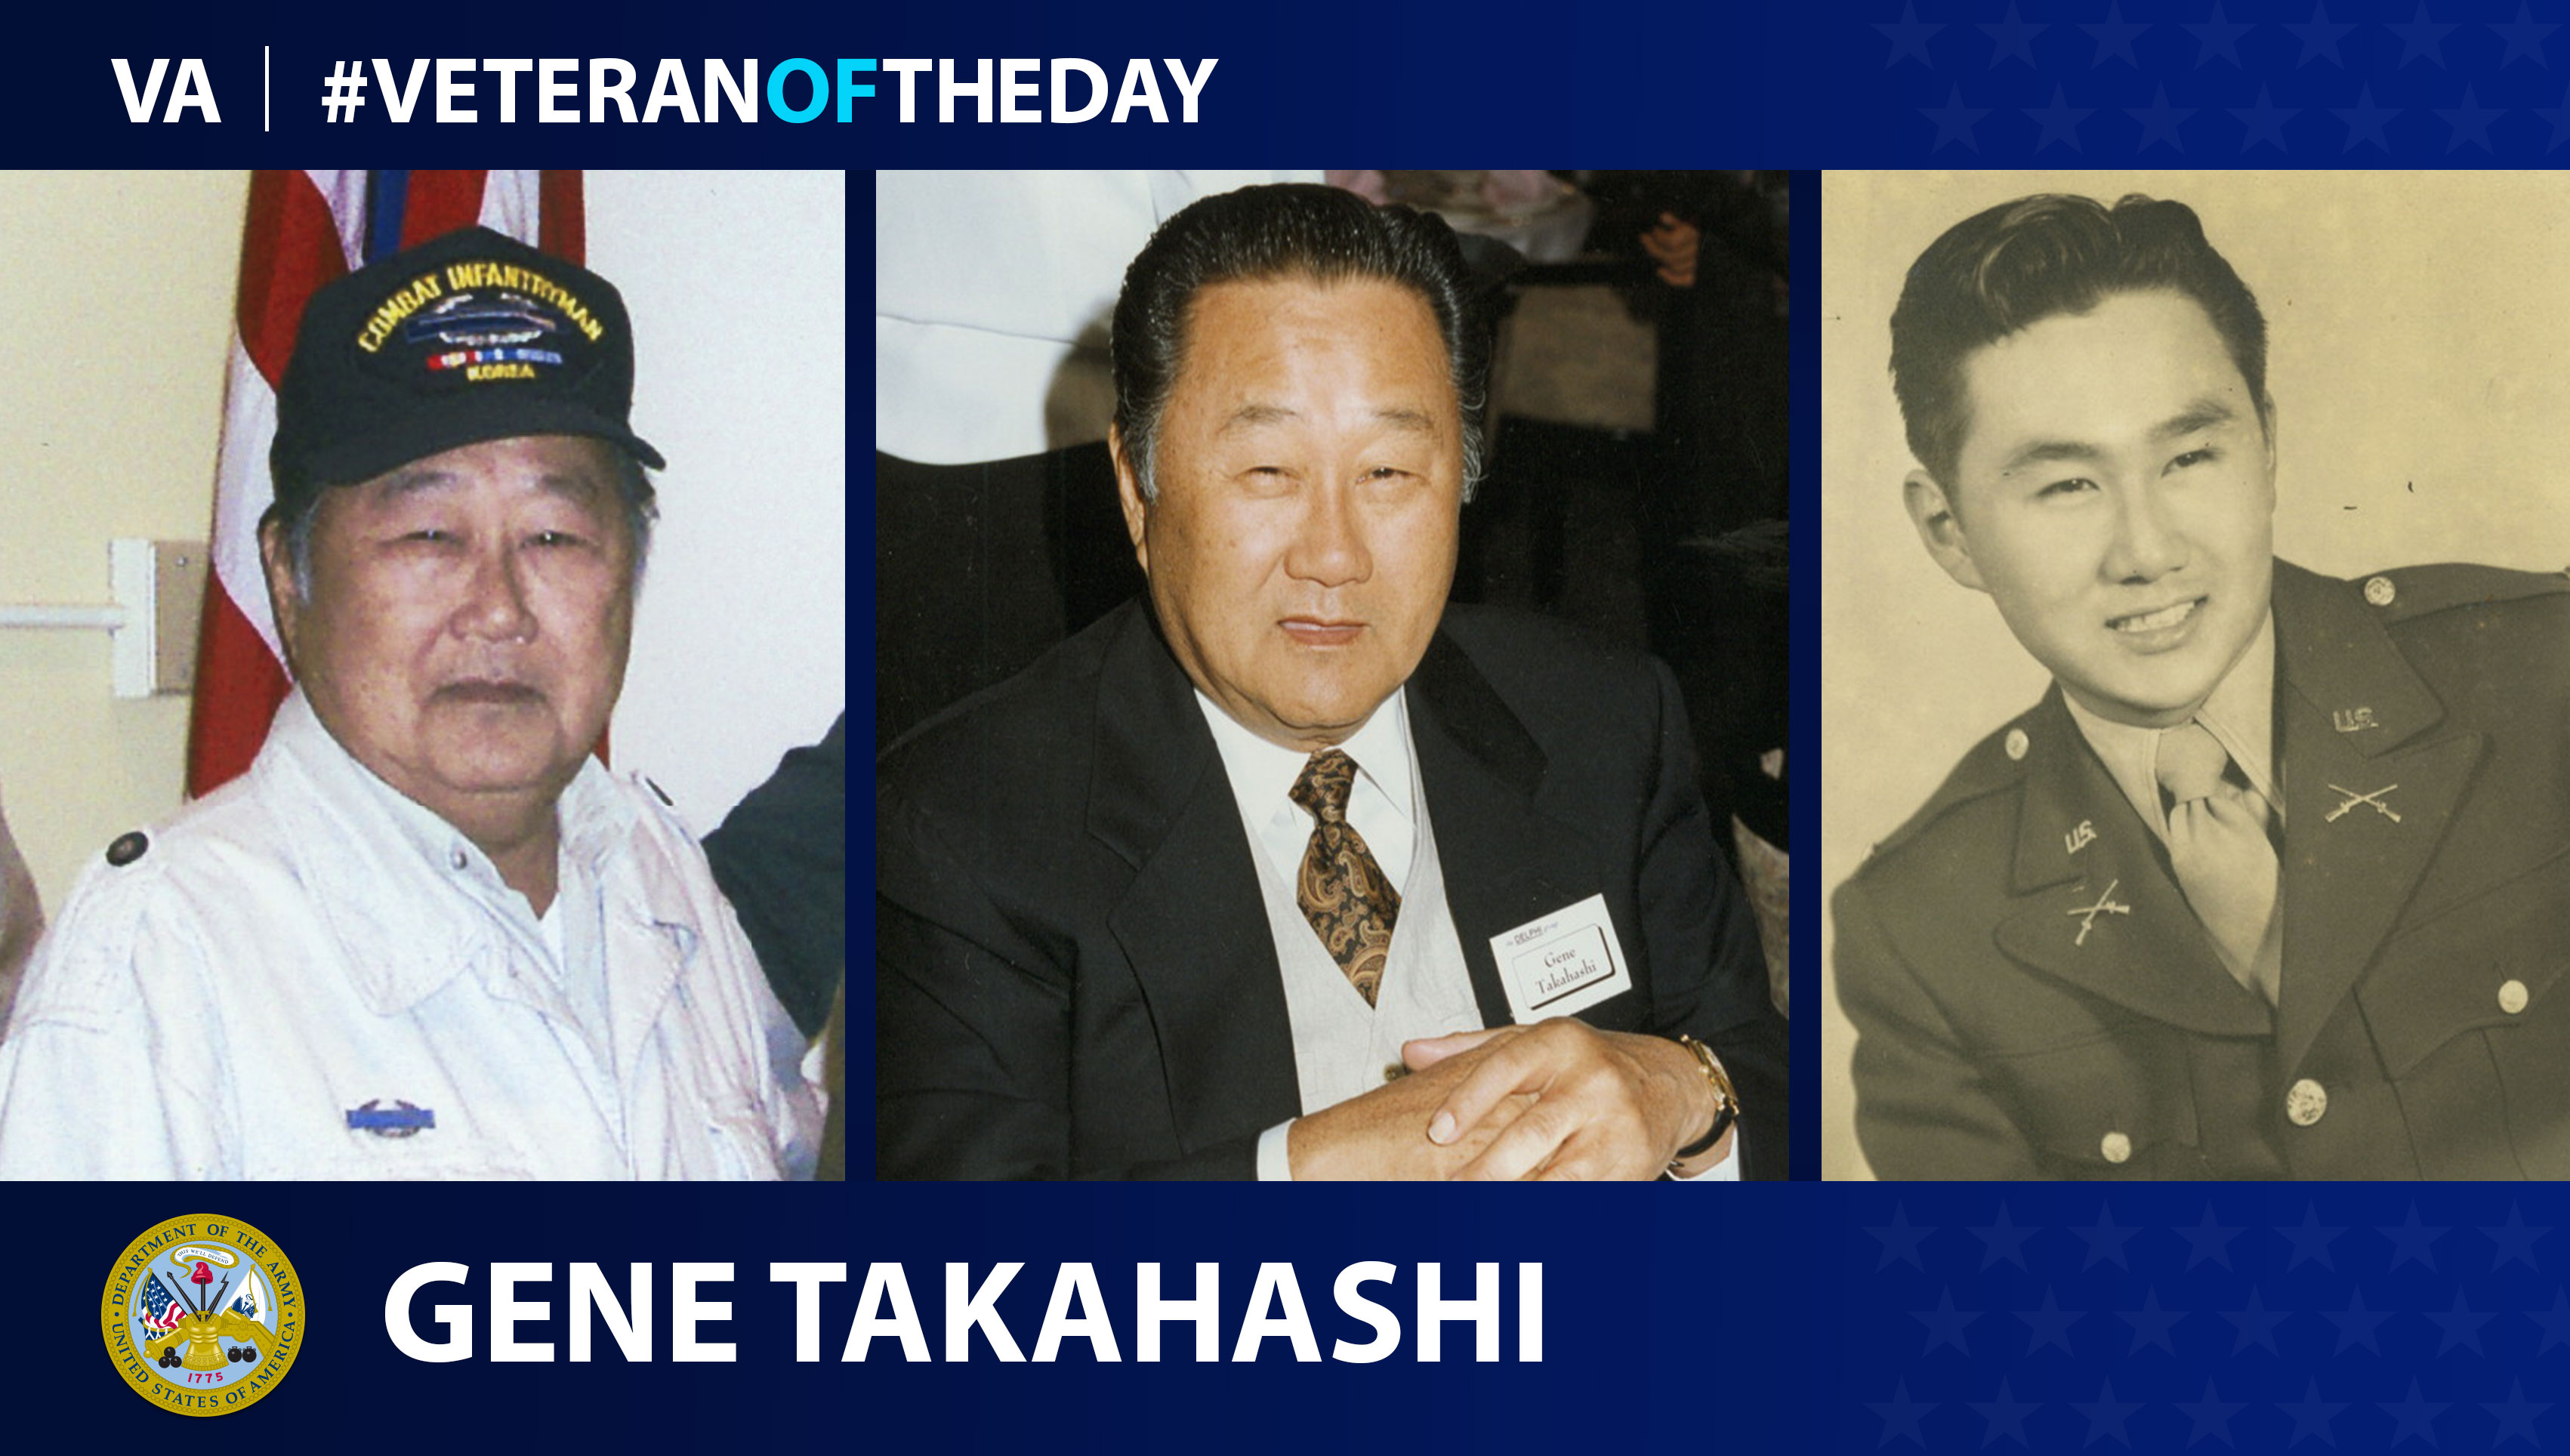 Gene Takahashi served in WWII and Korea.